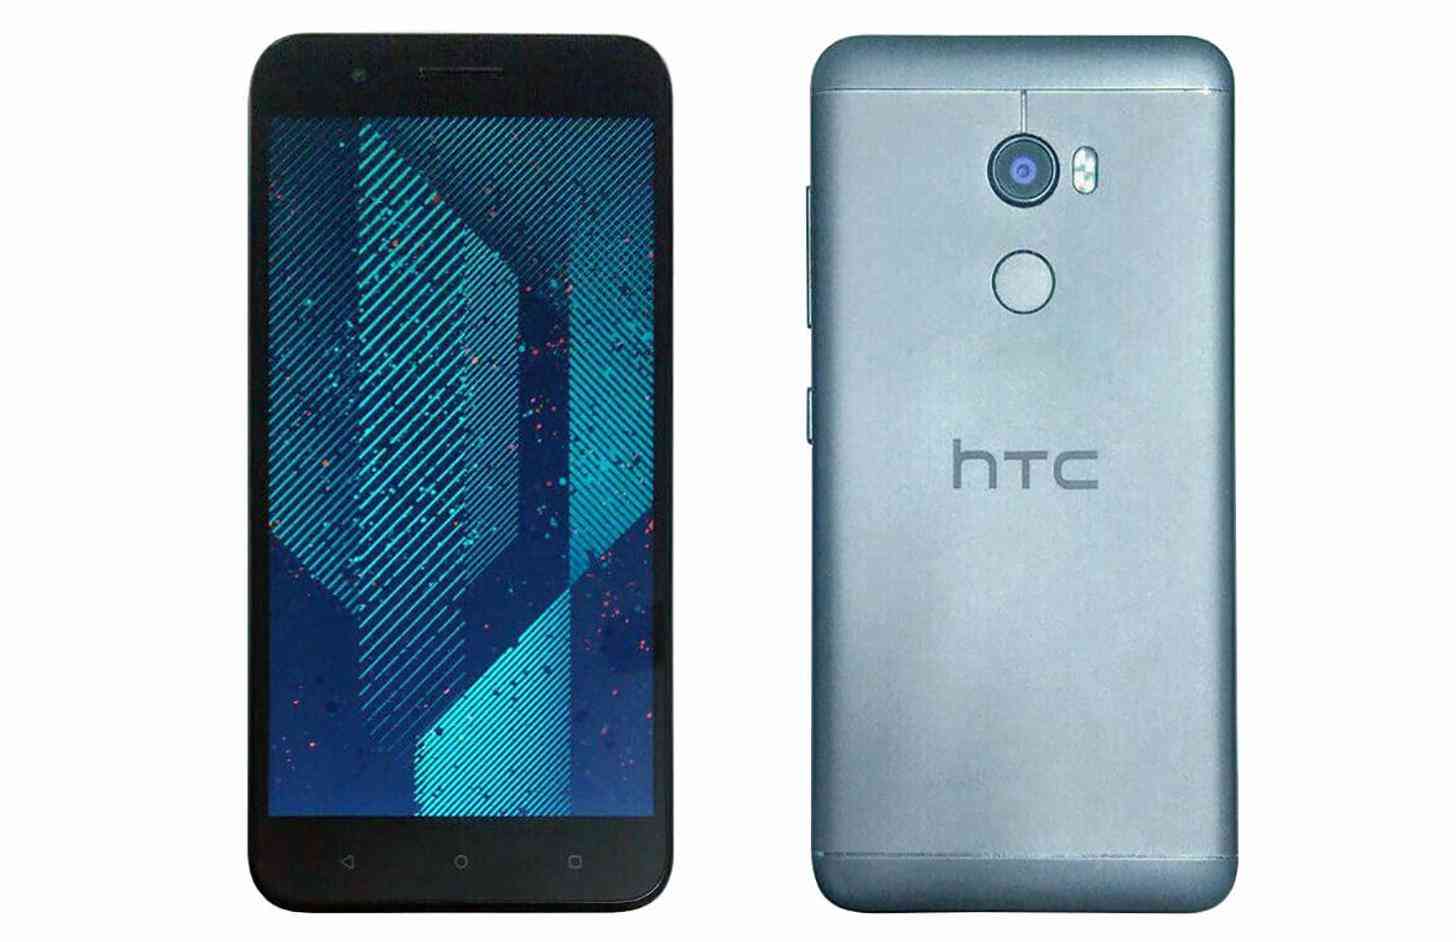 HTC One X10 images leak